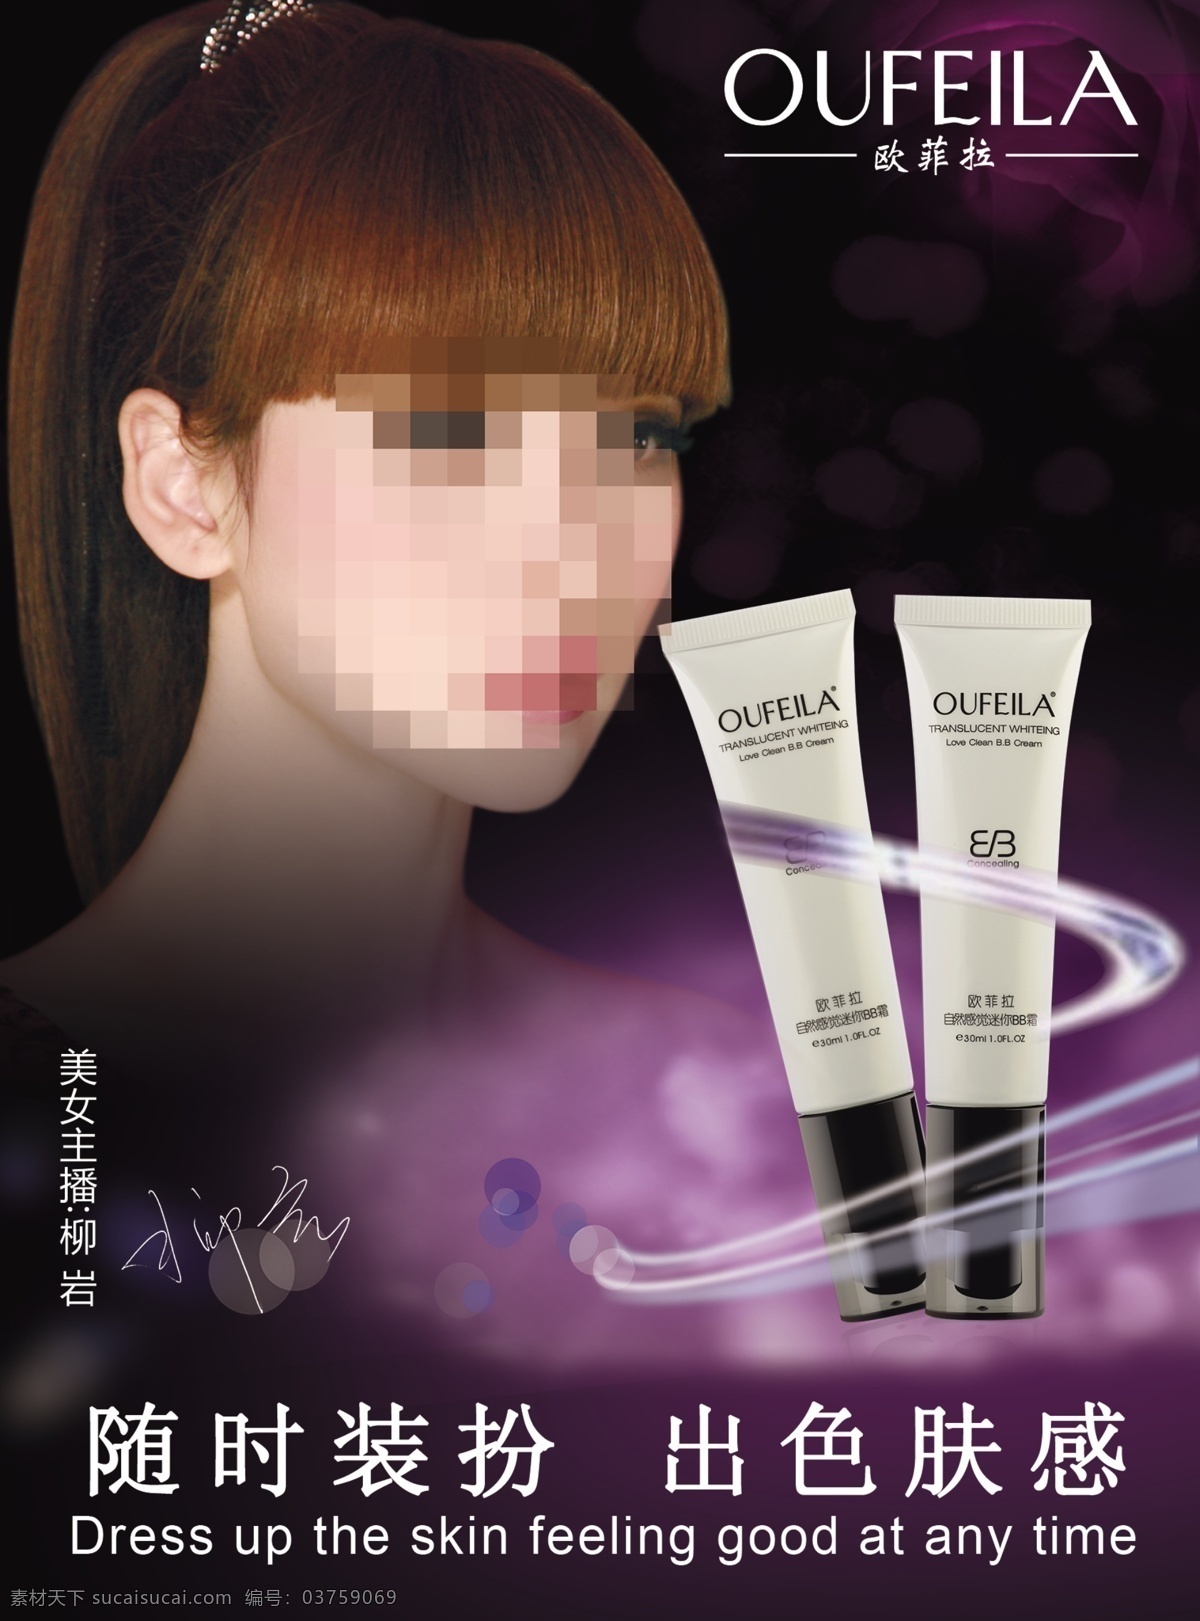 bb 霜 促销 广告 化妆品 彩妆 护肤 bb霜 促销广告 海报图 美女 广告设计模板 源文件